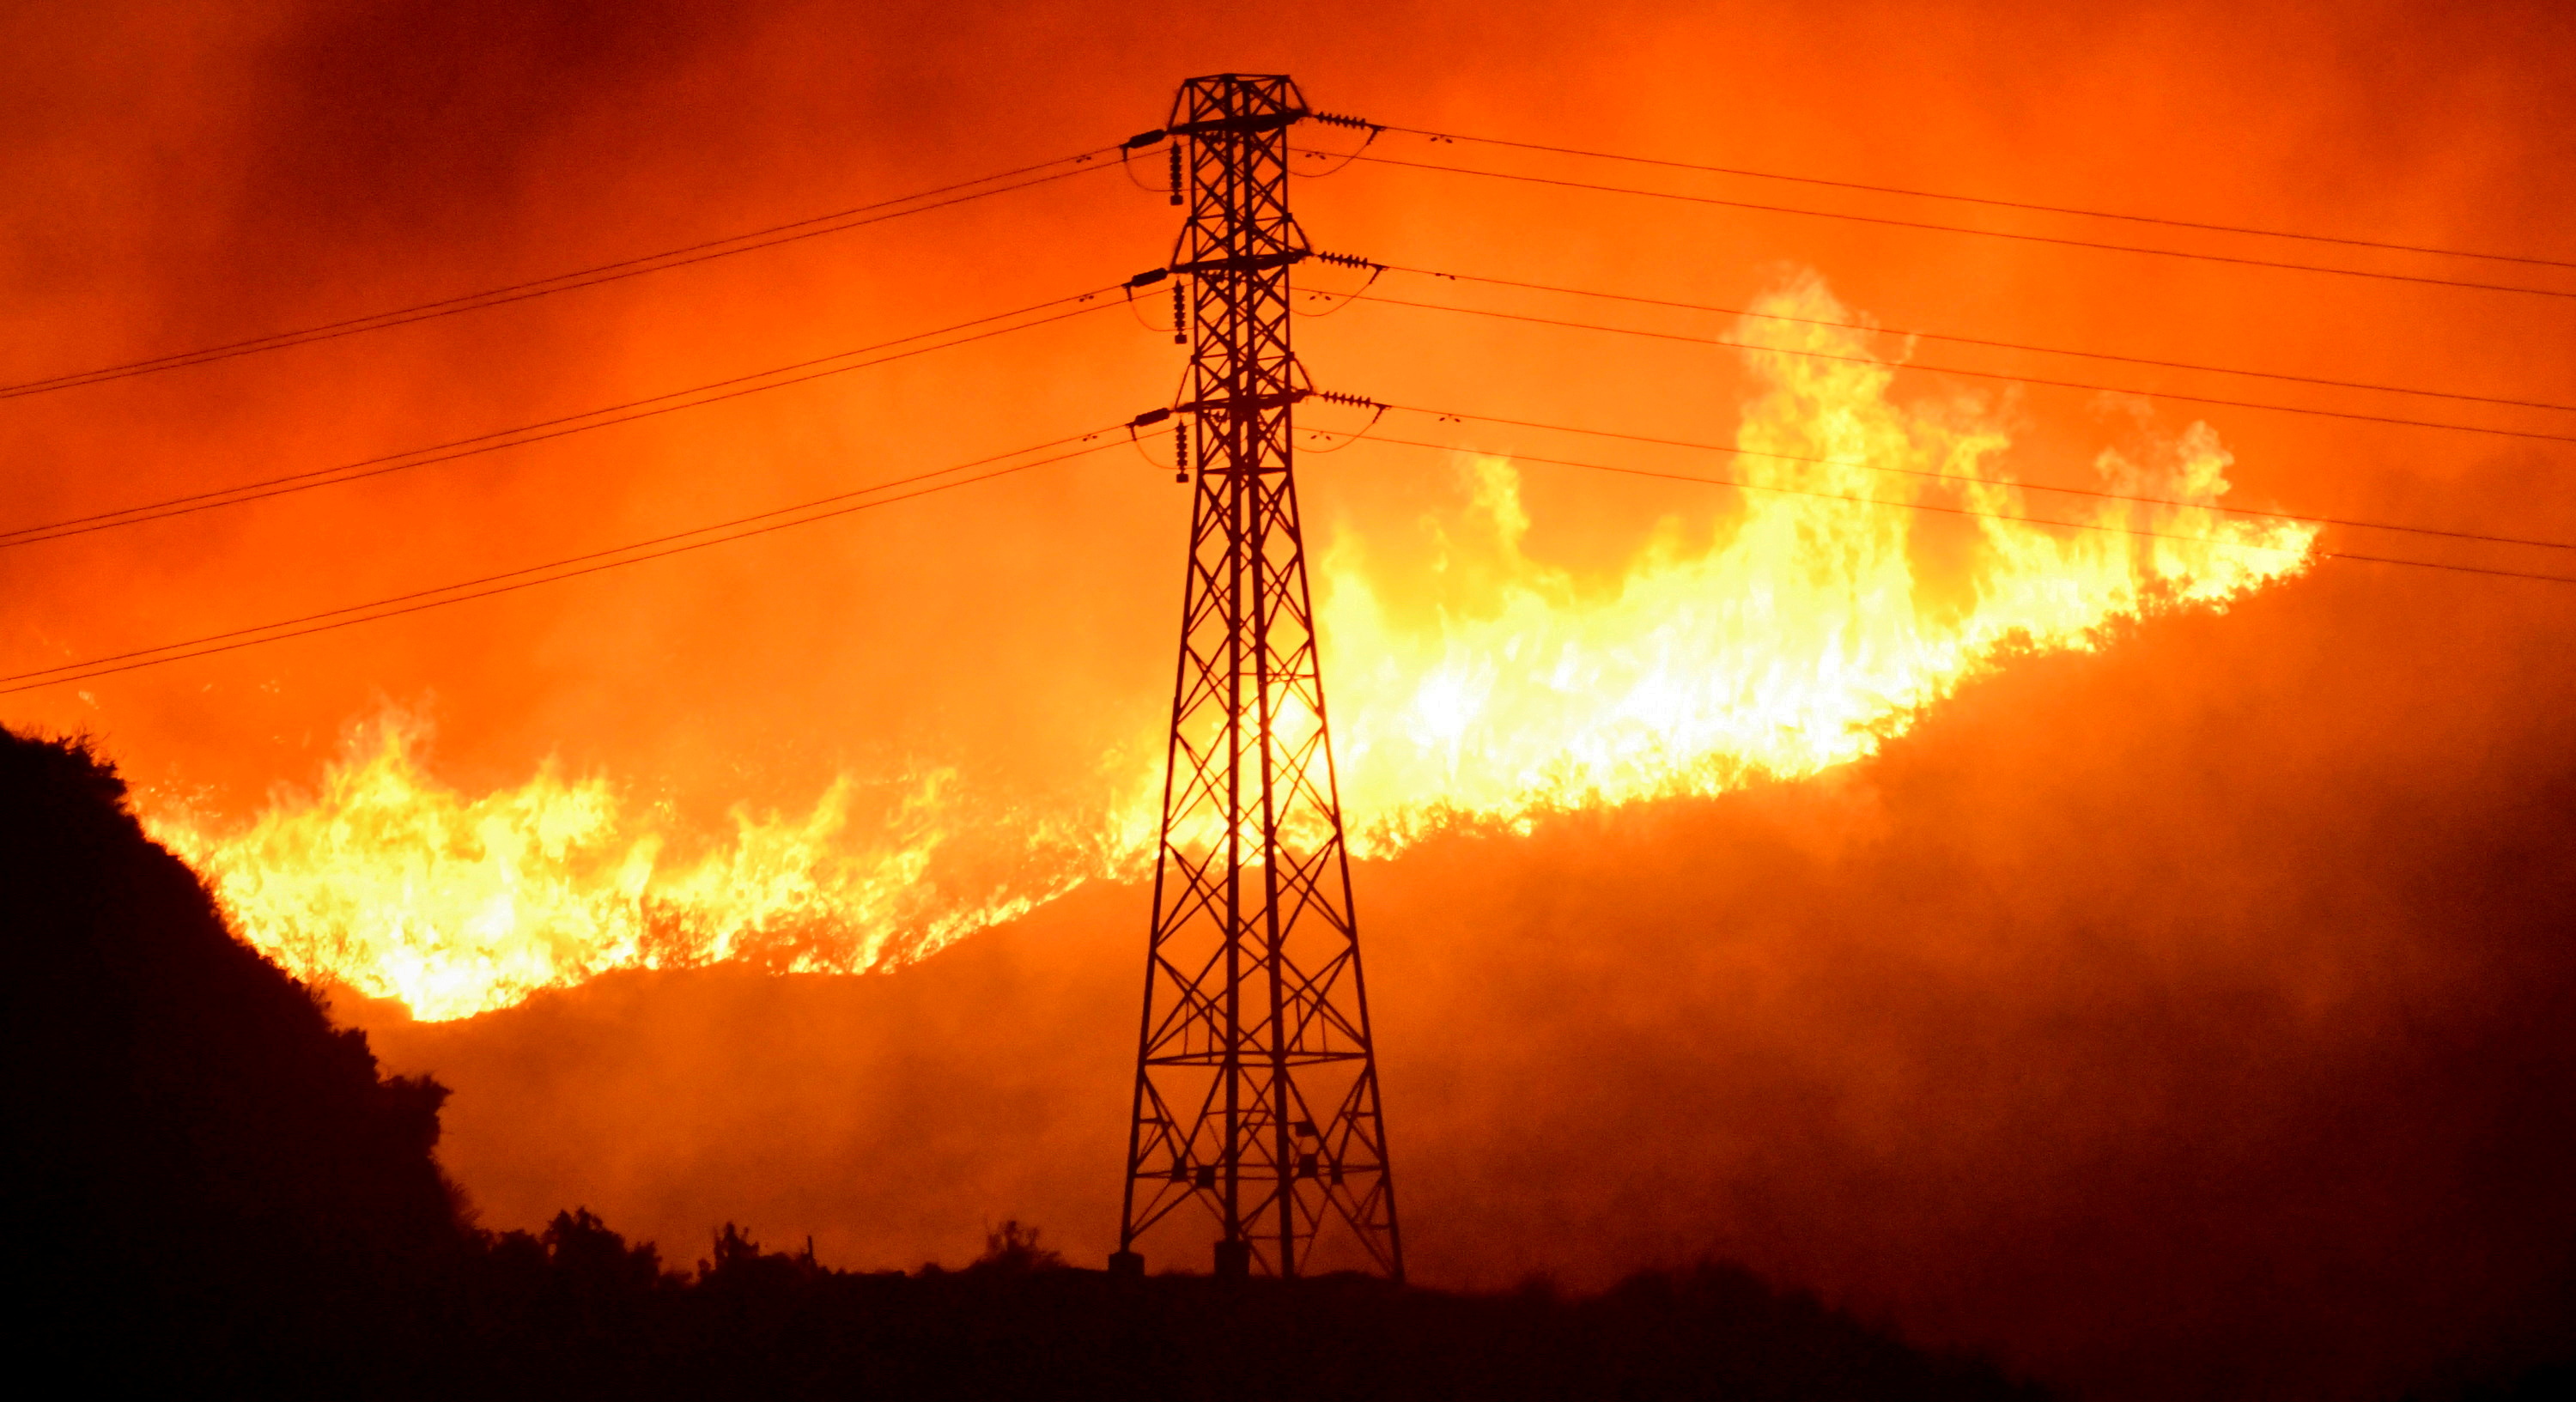 Firefighters battle a wind-driven wildfire in Sylmar, California